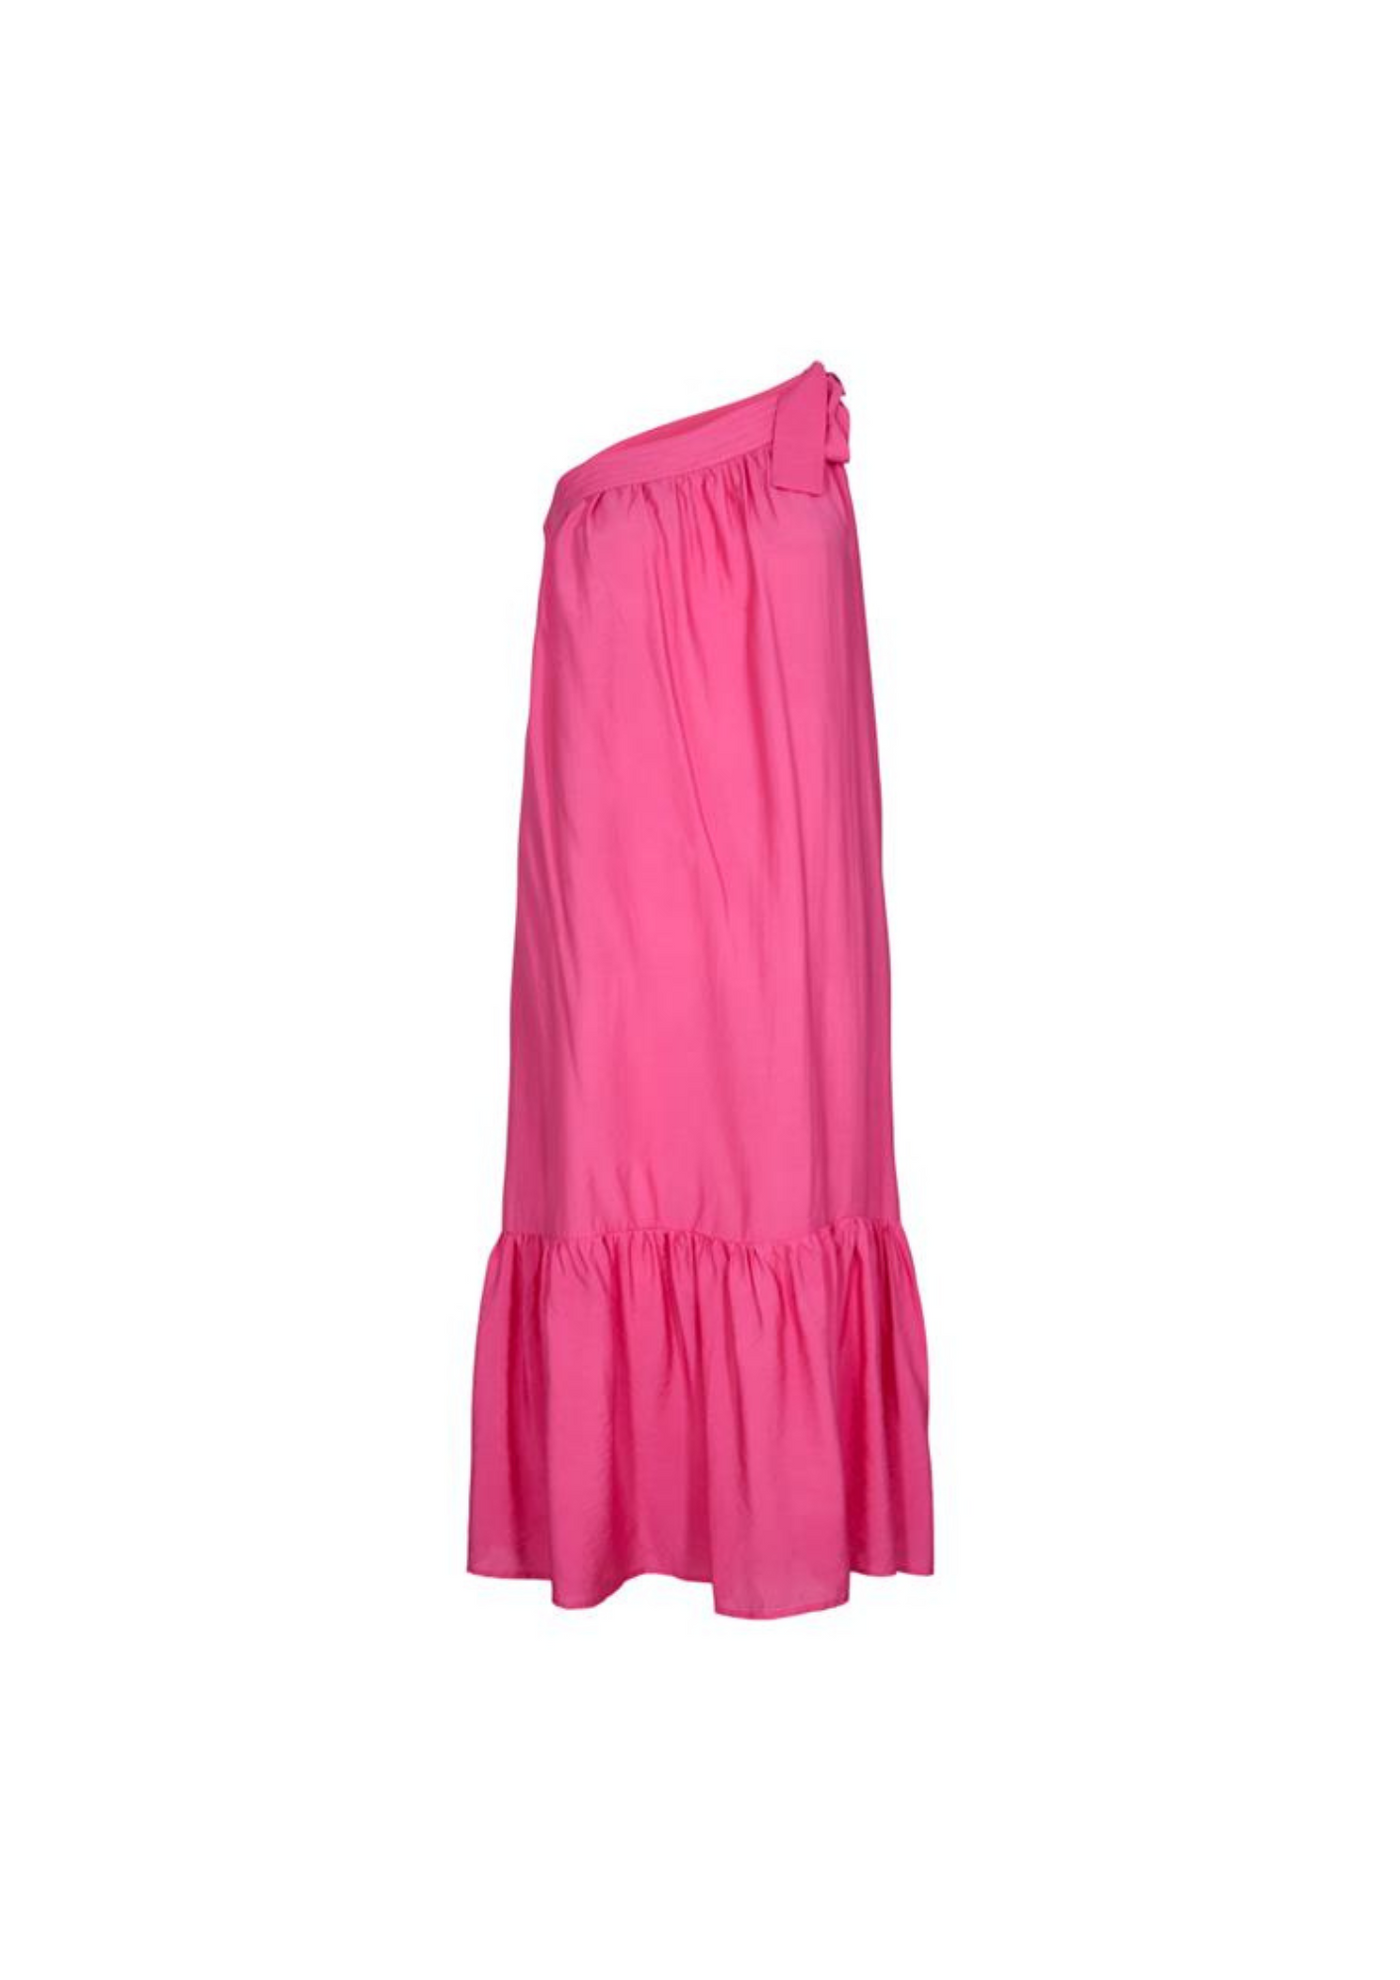 Co' Couture | Callum Asym Dress Pink